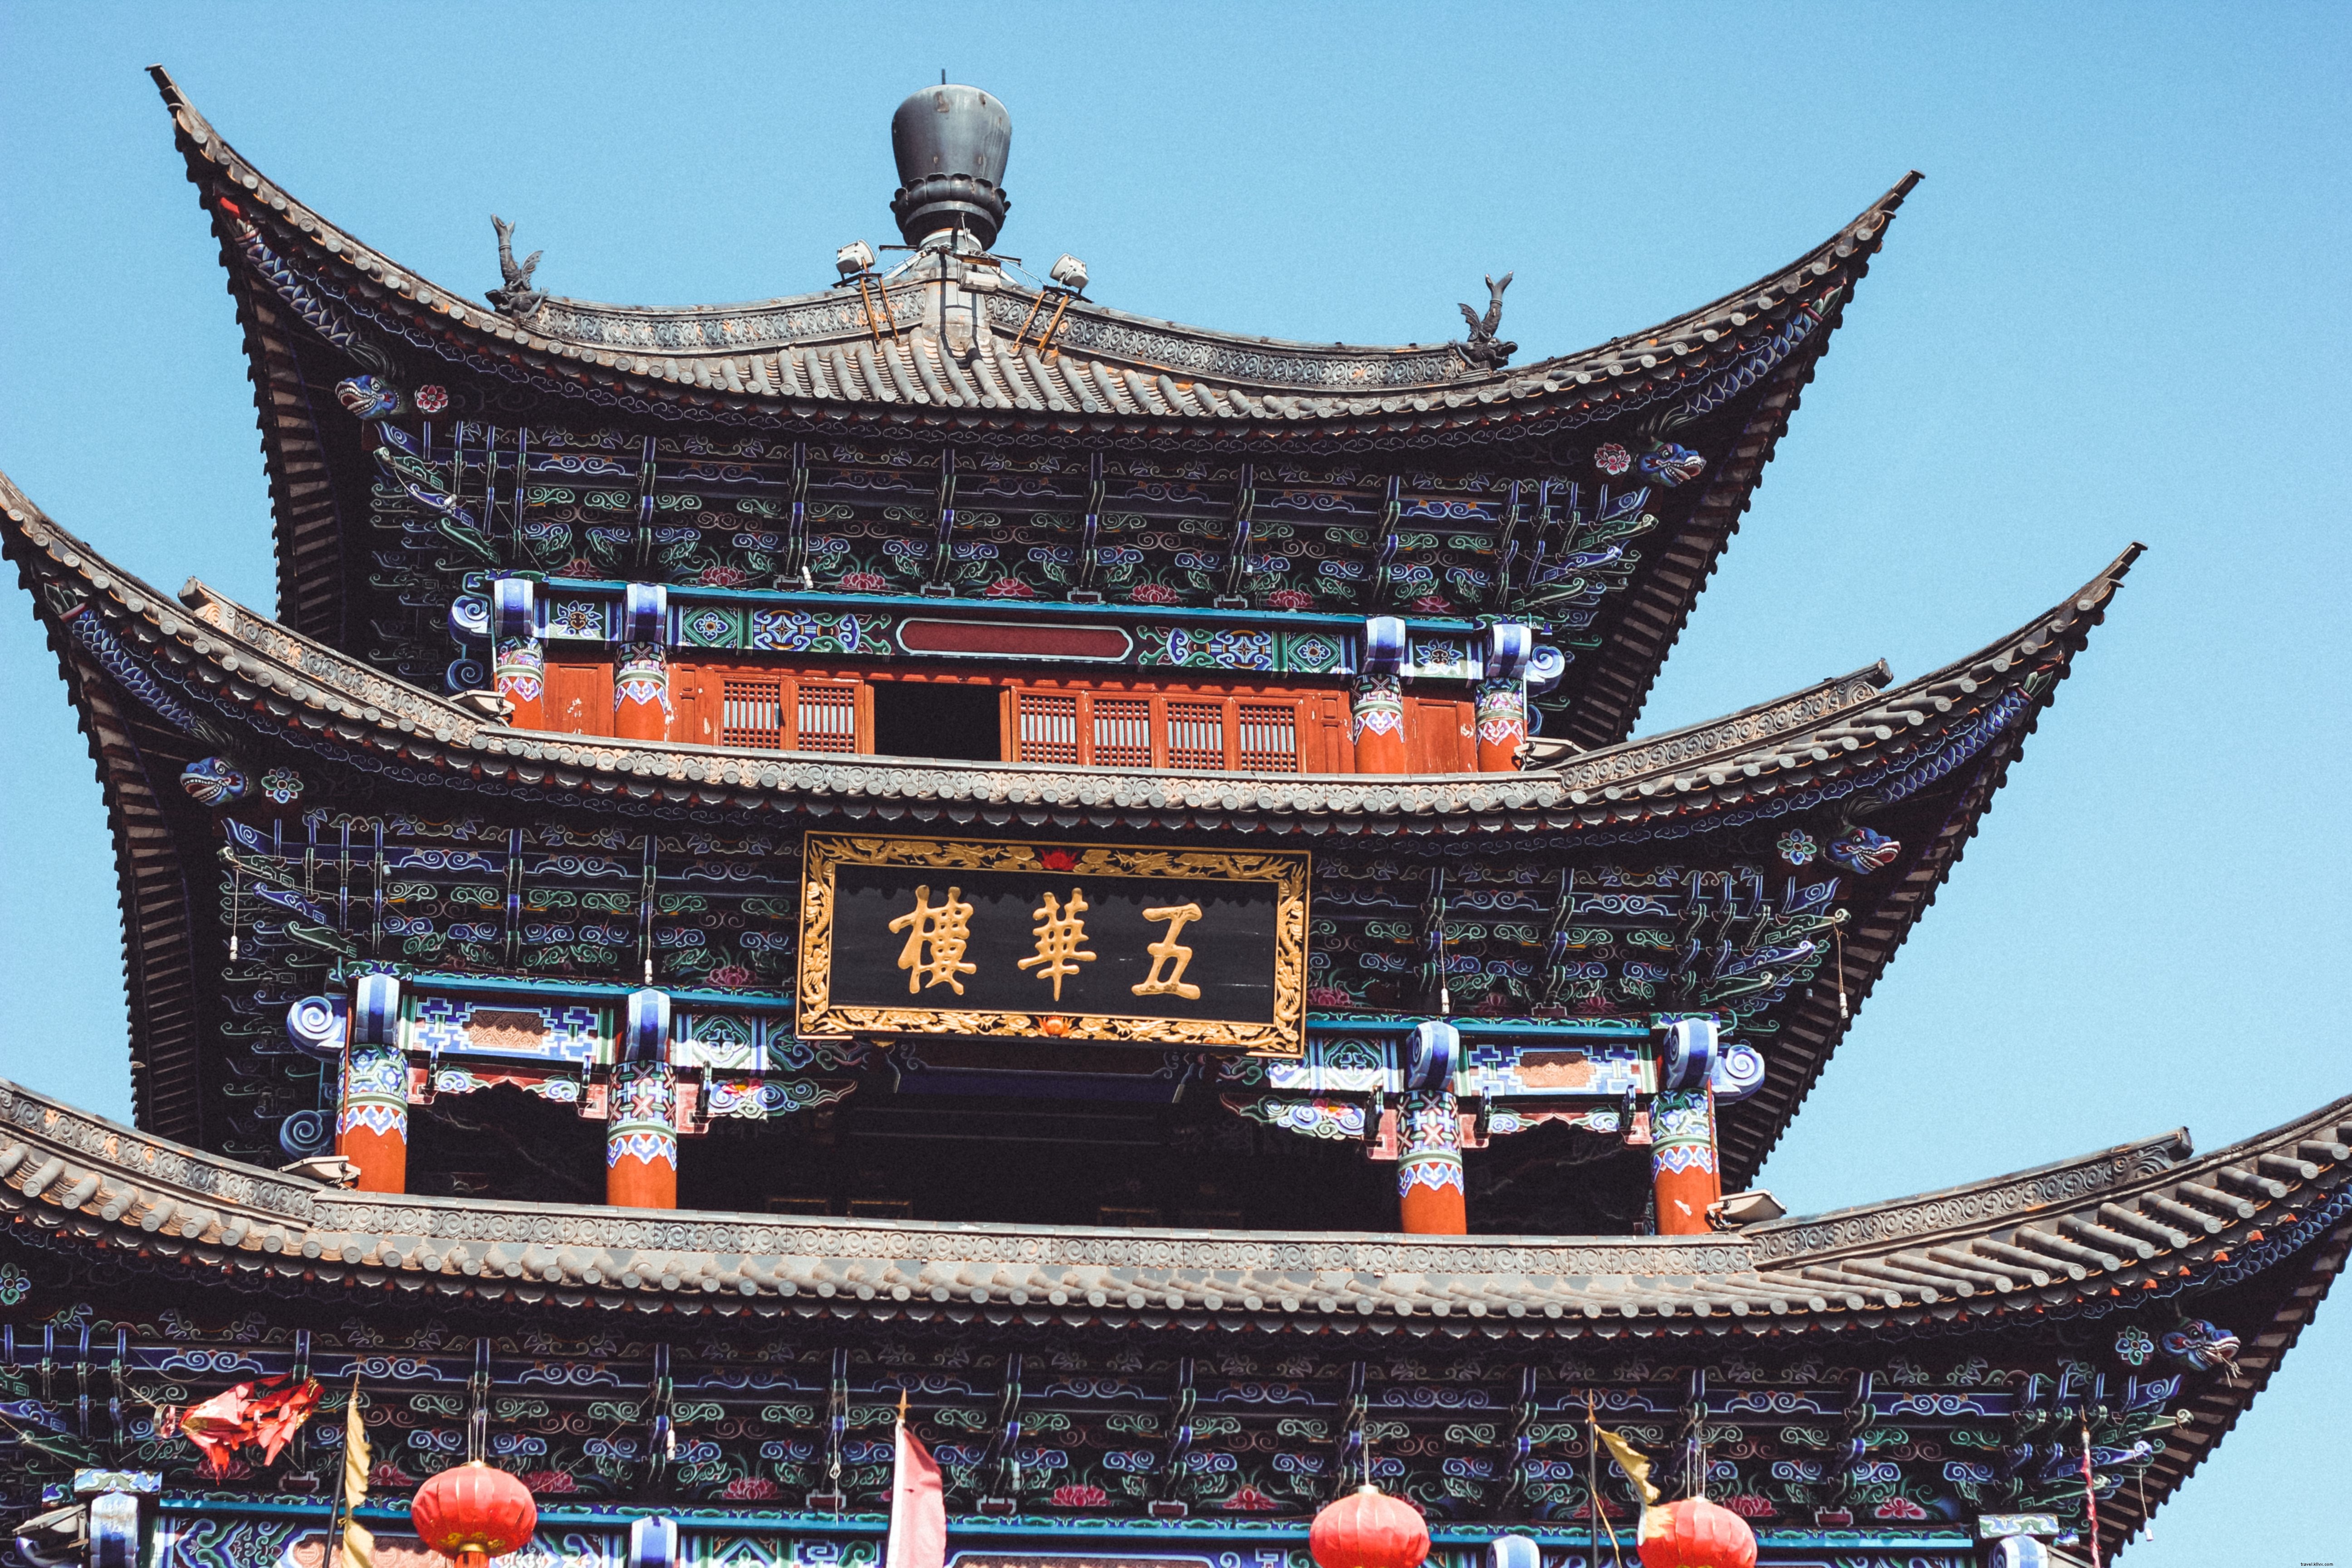 Foto del exterior detallado del templo en China